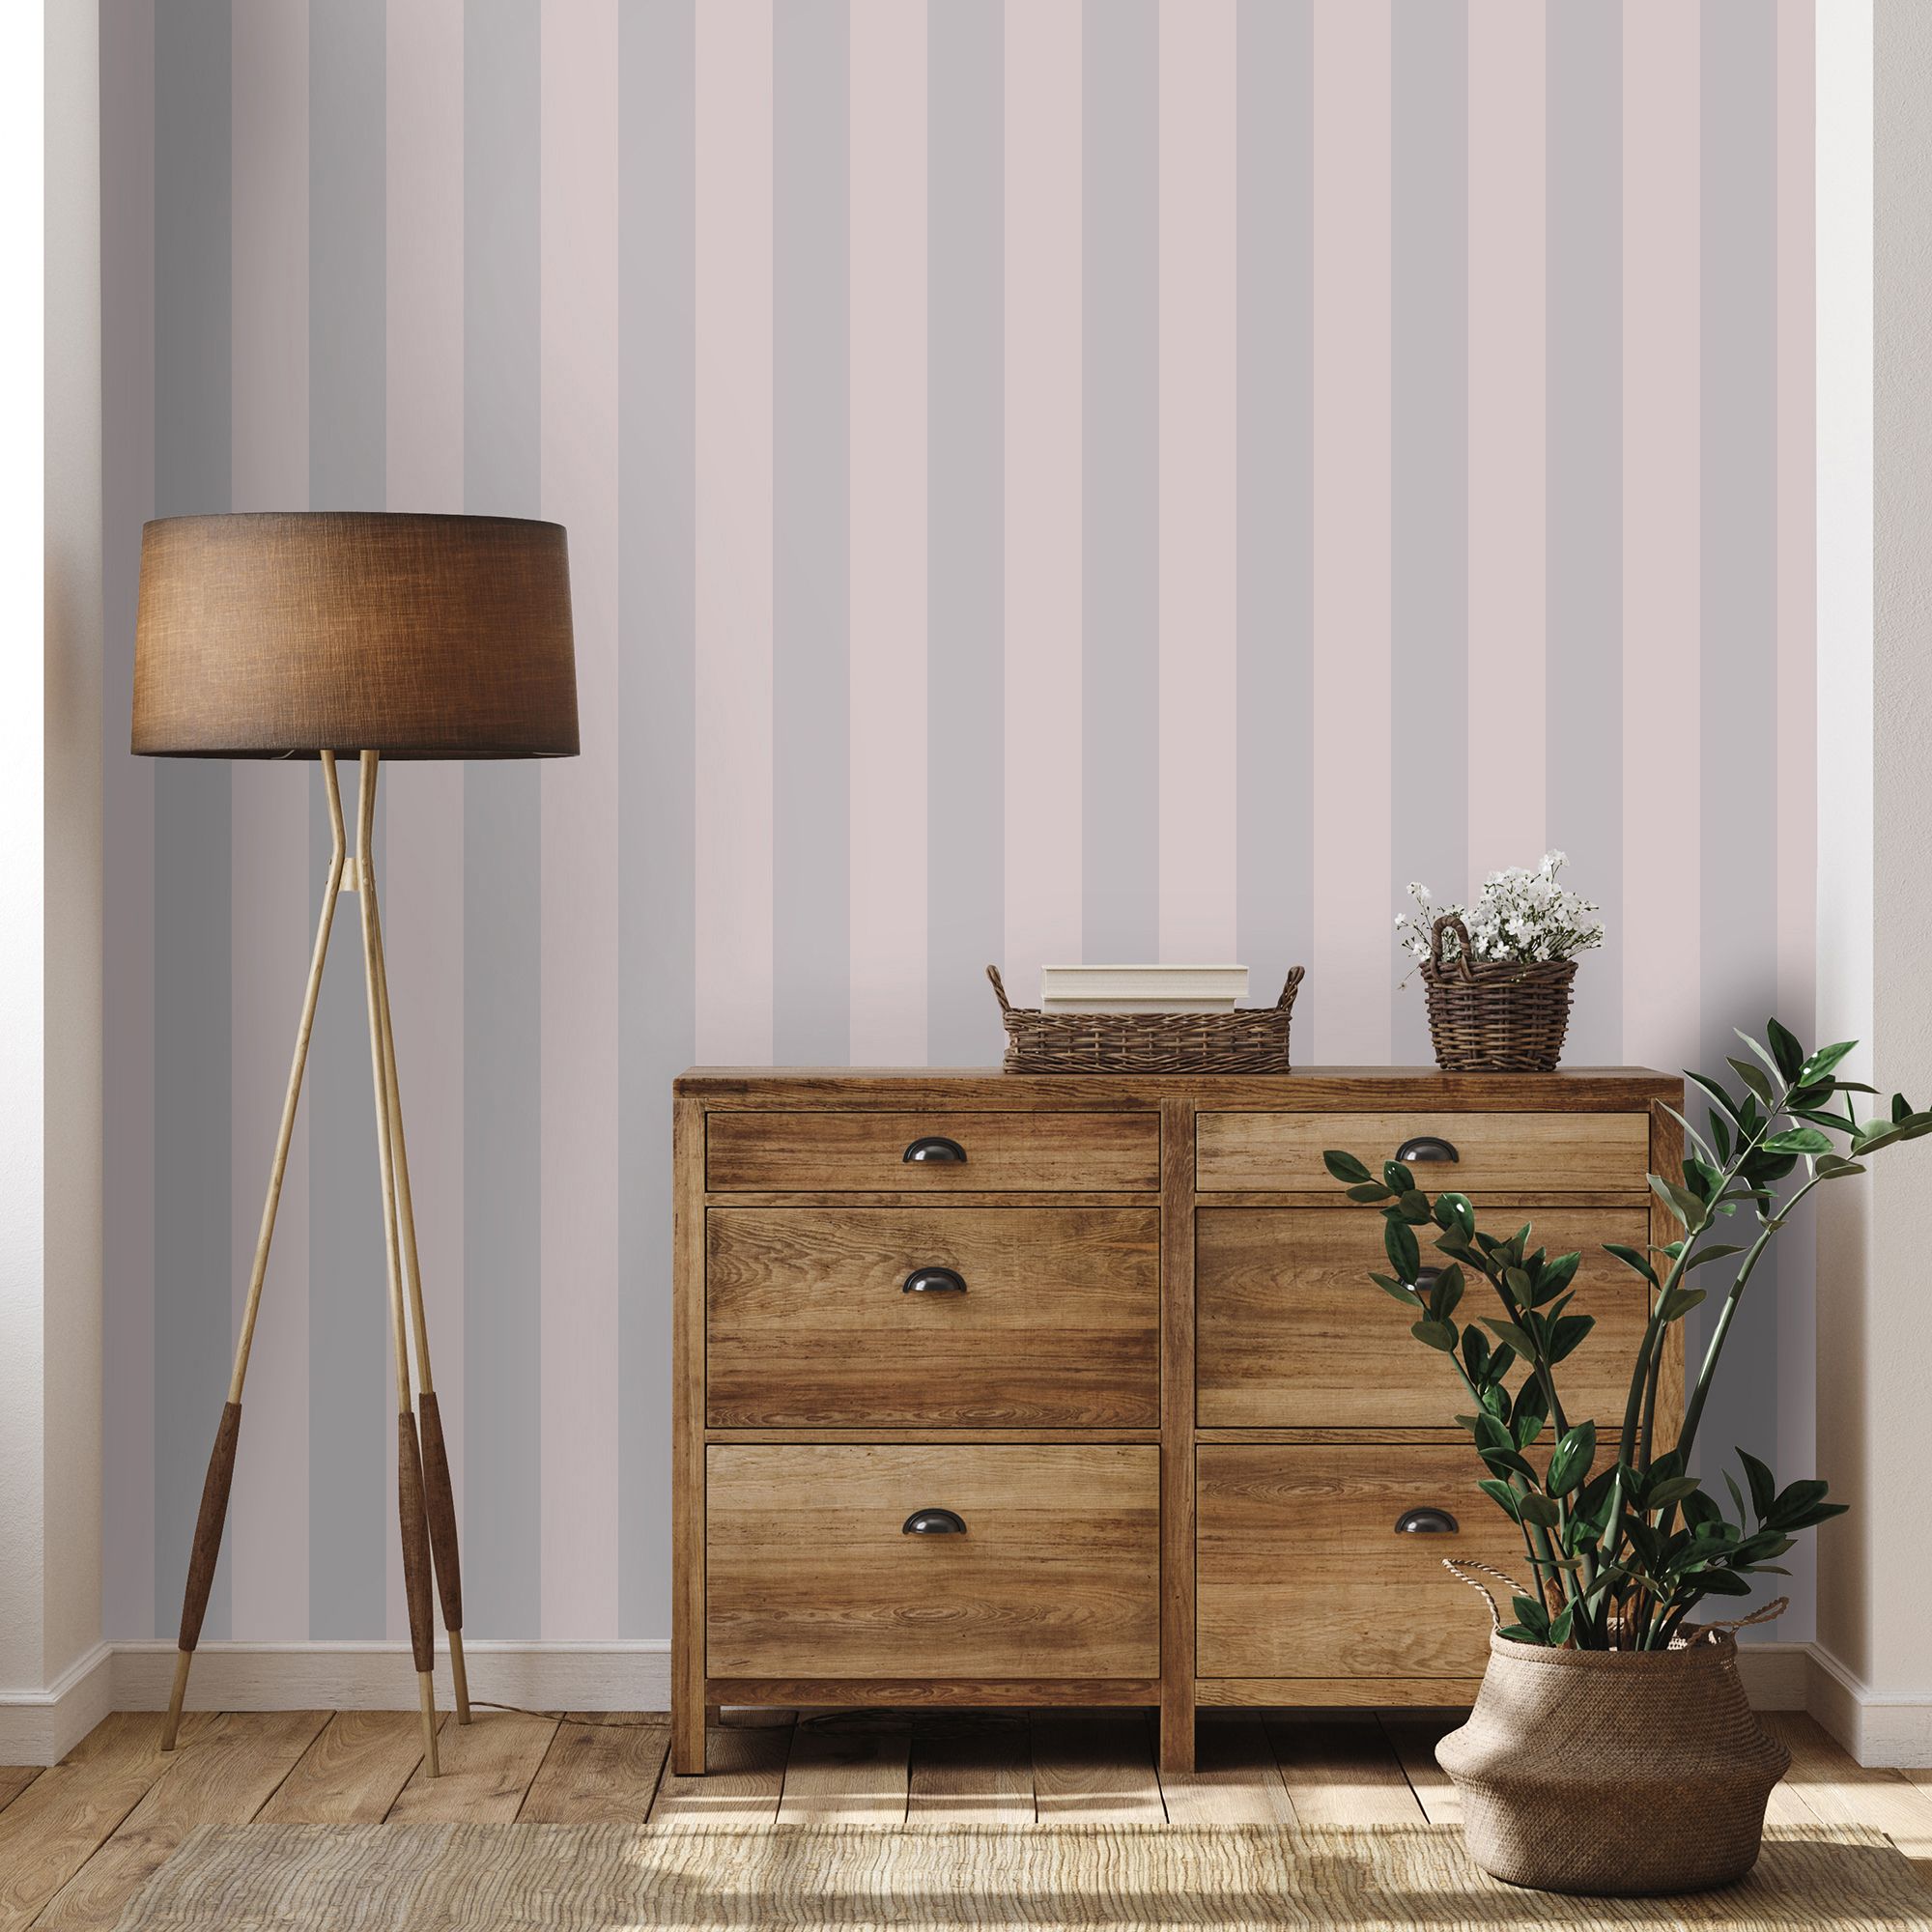 Holden Décor Purple Stripe Smooth Wallpaper